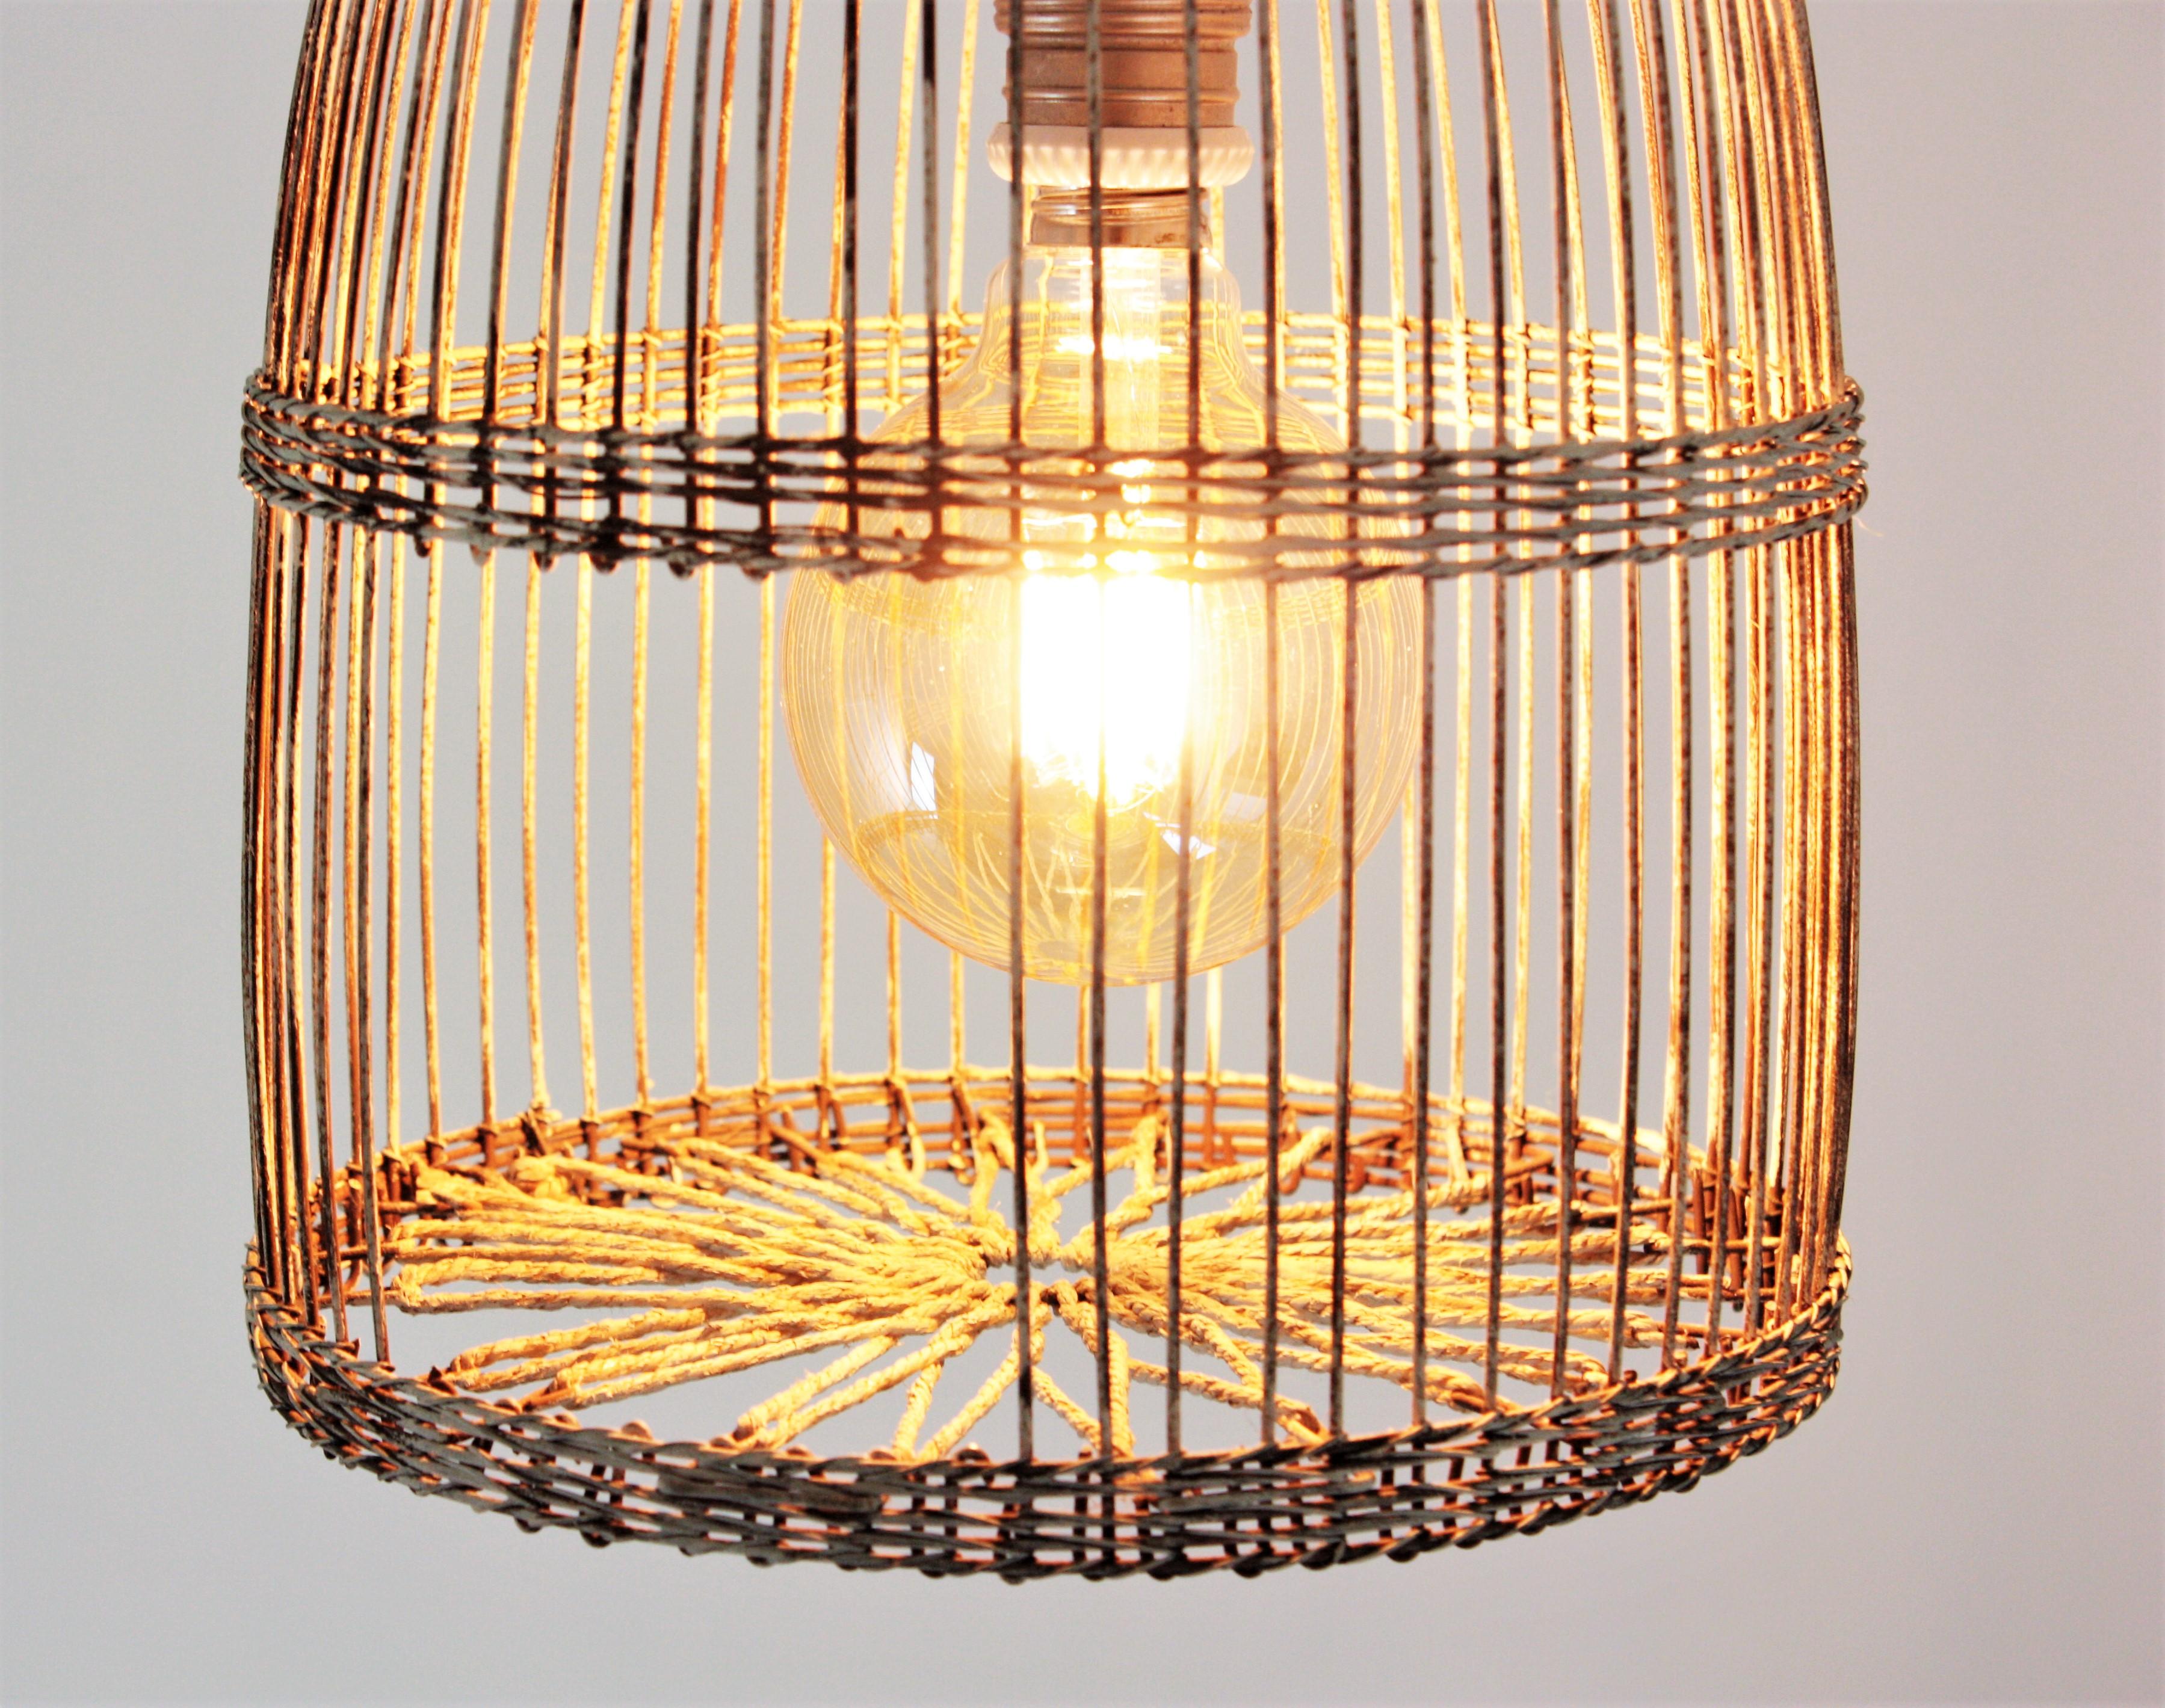 Wicker Birdcage Rustic Hanging Light Pendant Lamp